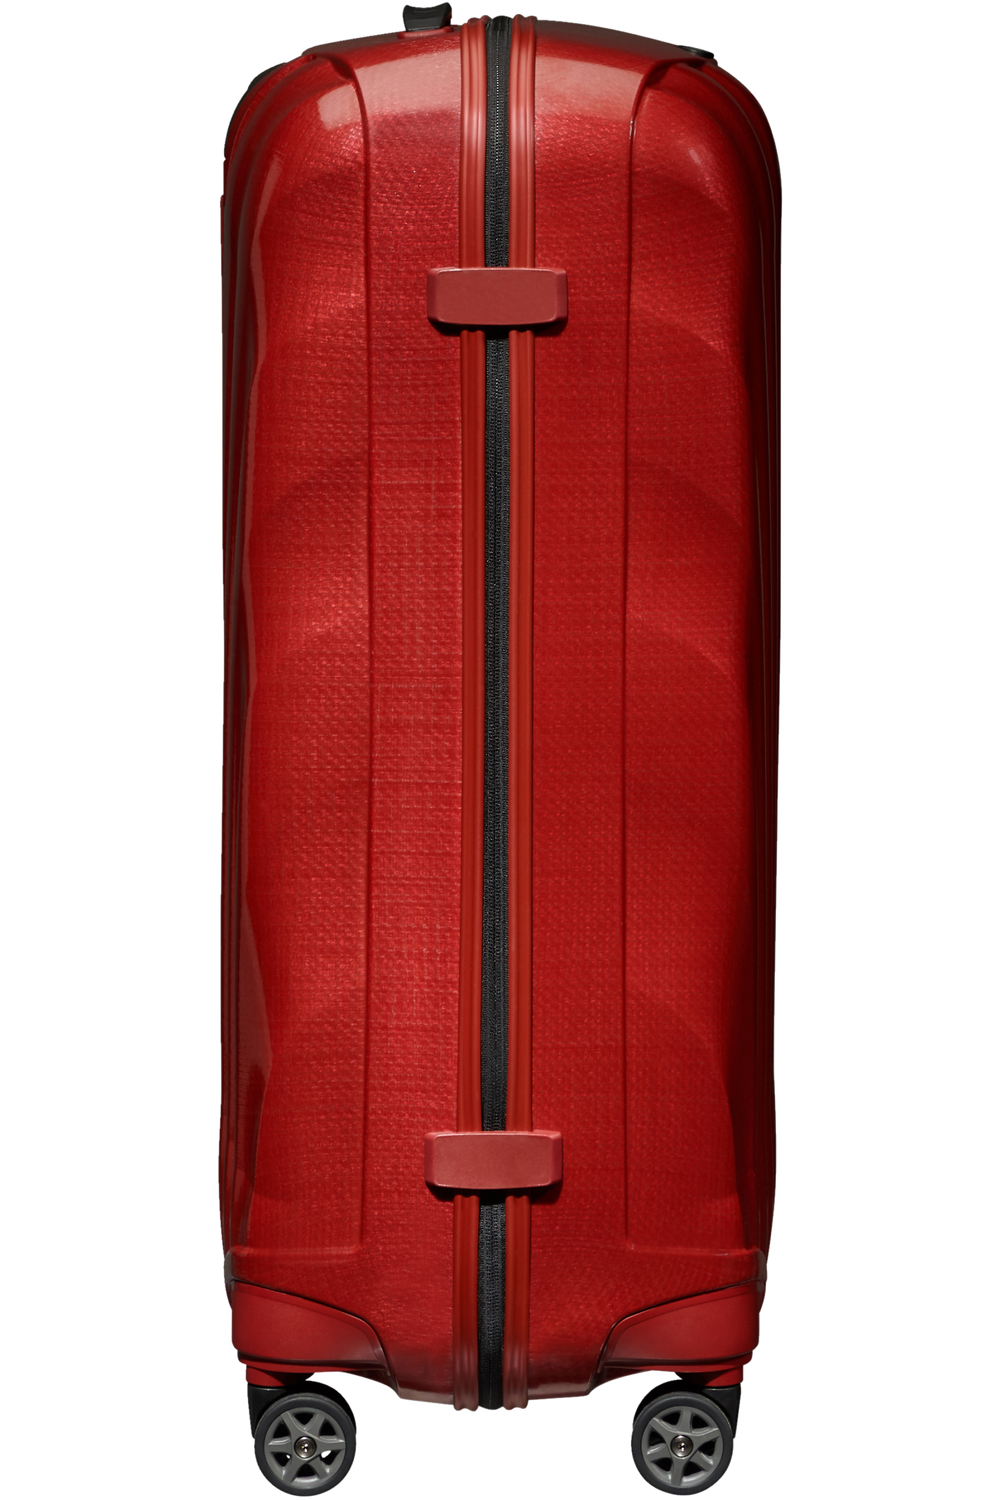 Koffert | Curv materiale | Stor | Chili Rød | 4 Hjul | 10 Års Garanti | C-LITE SPINNE